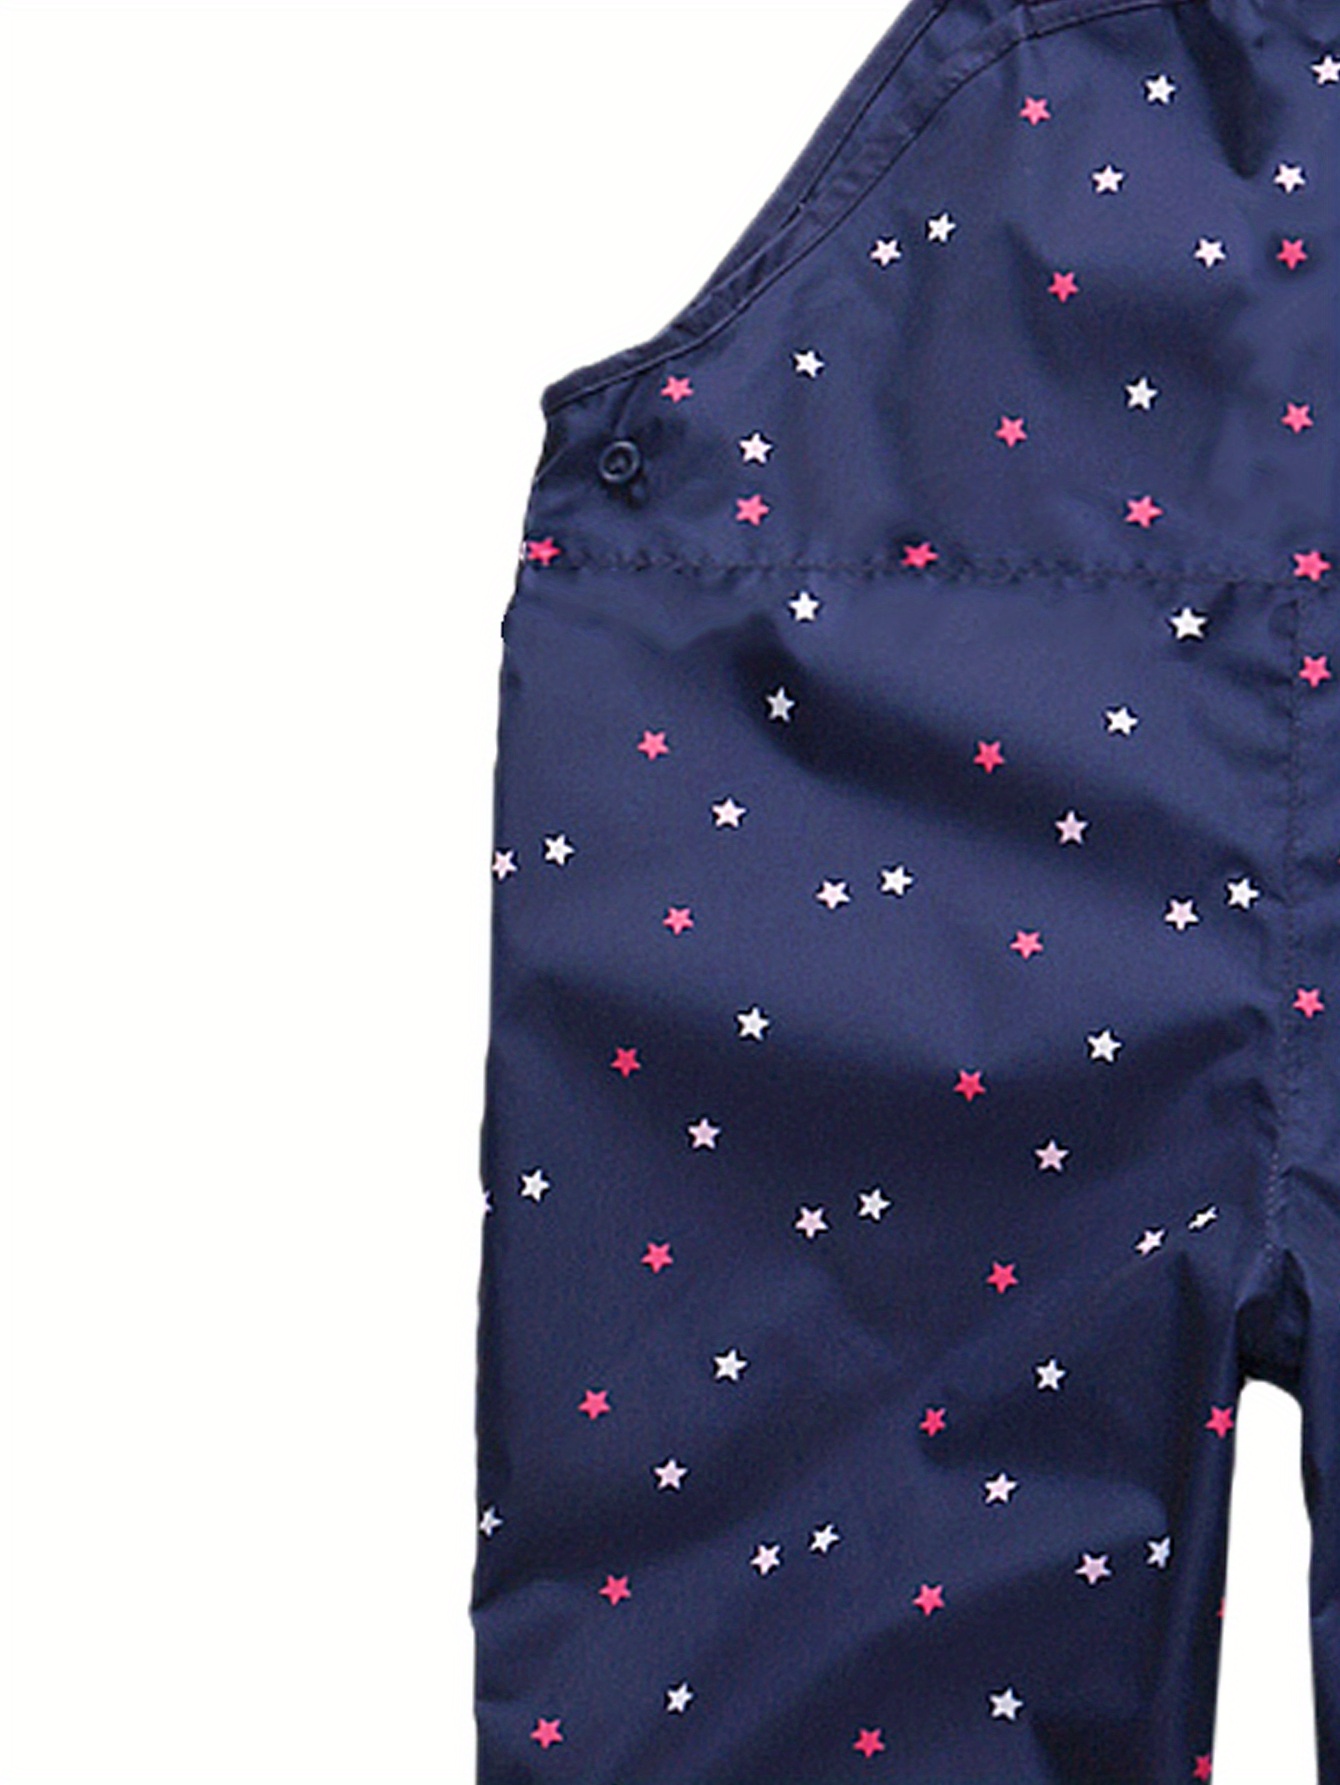 Puddlegear Kids Rain Pants in Navy Blue (bib, overall, shell style)